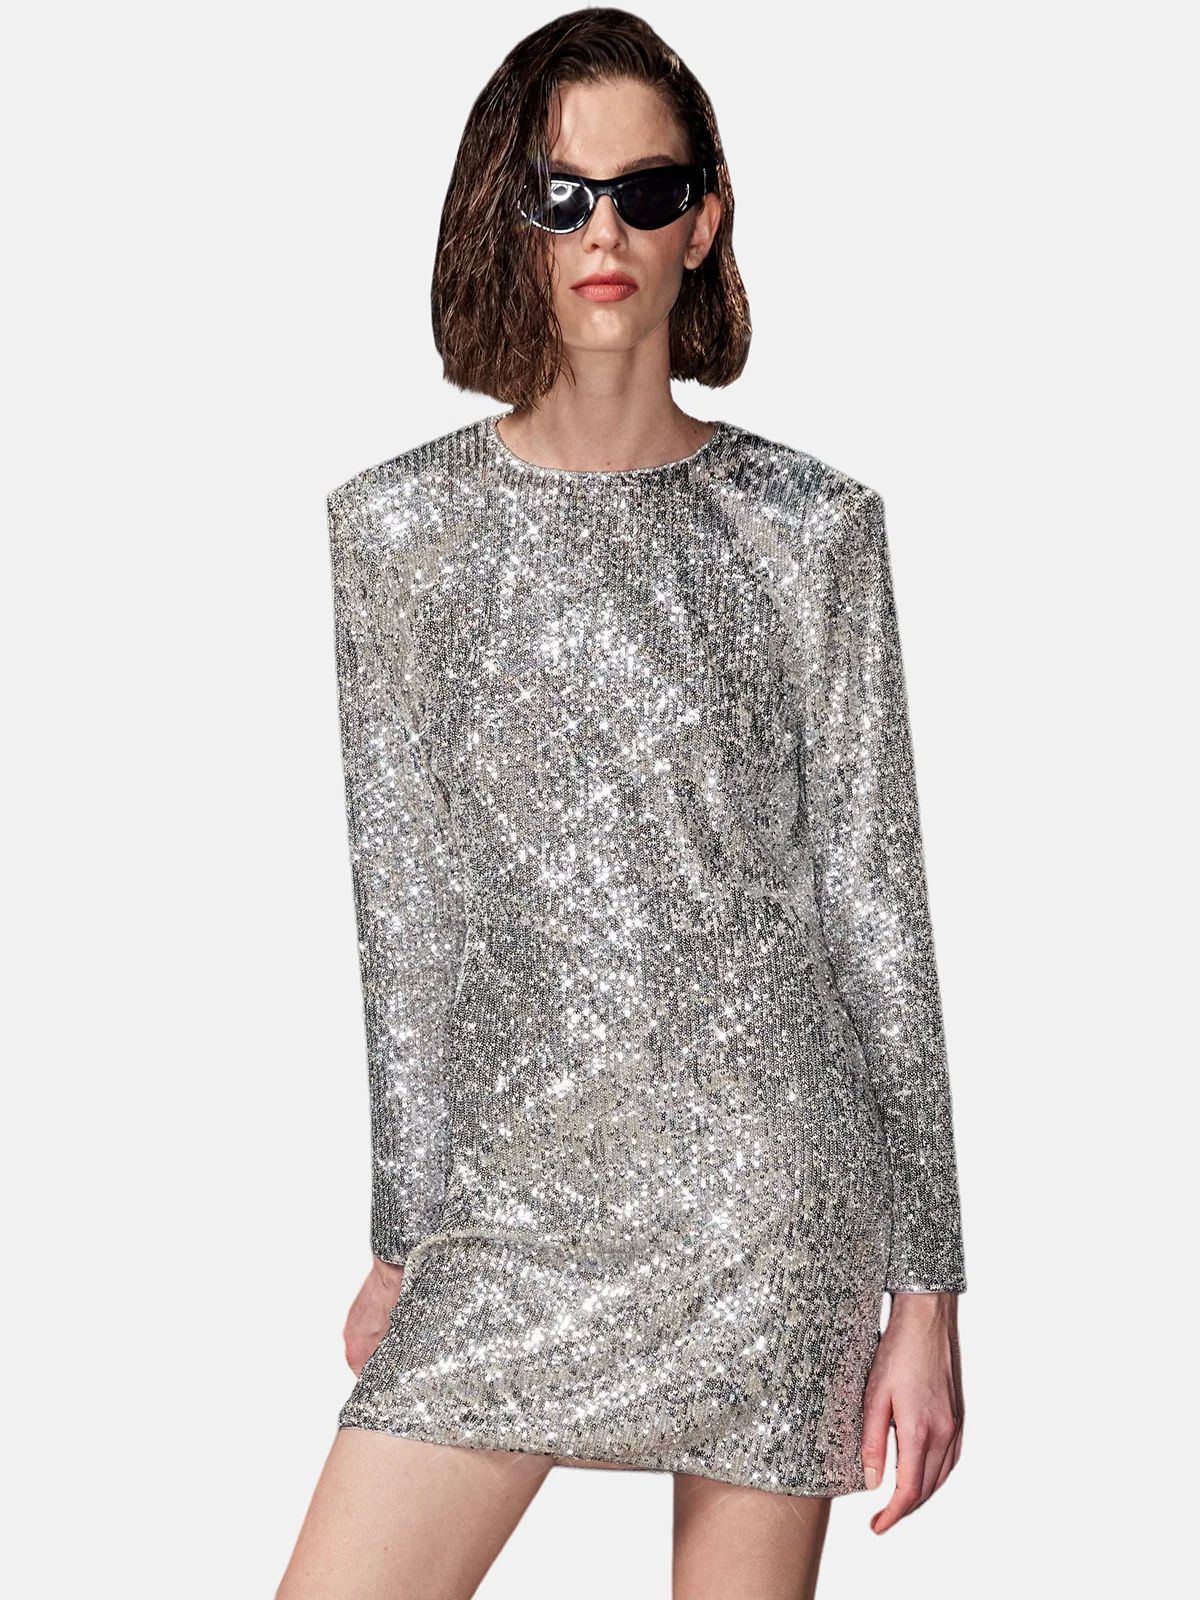 Three-dimensional Layered Sequined Backless Mini Dress | Richradiqs